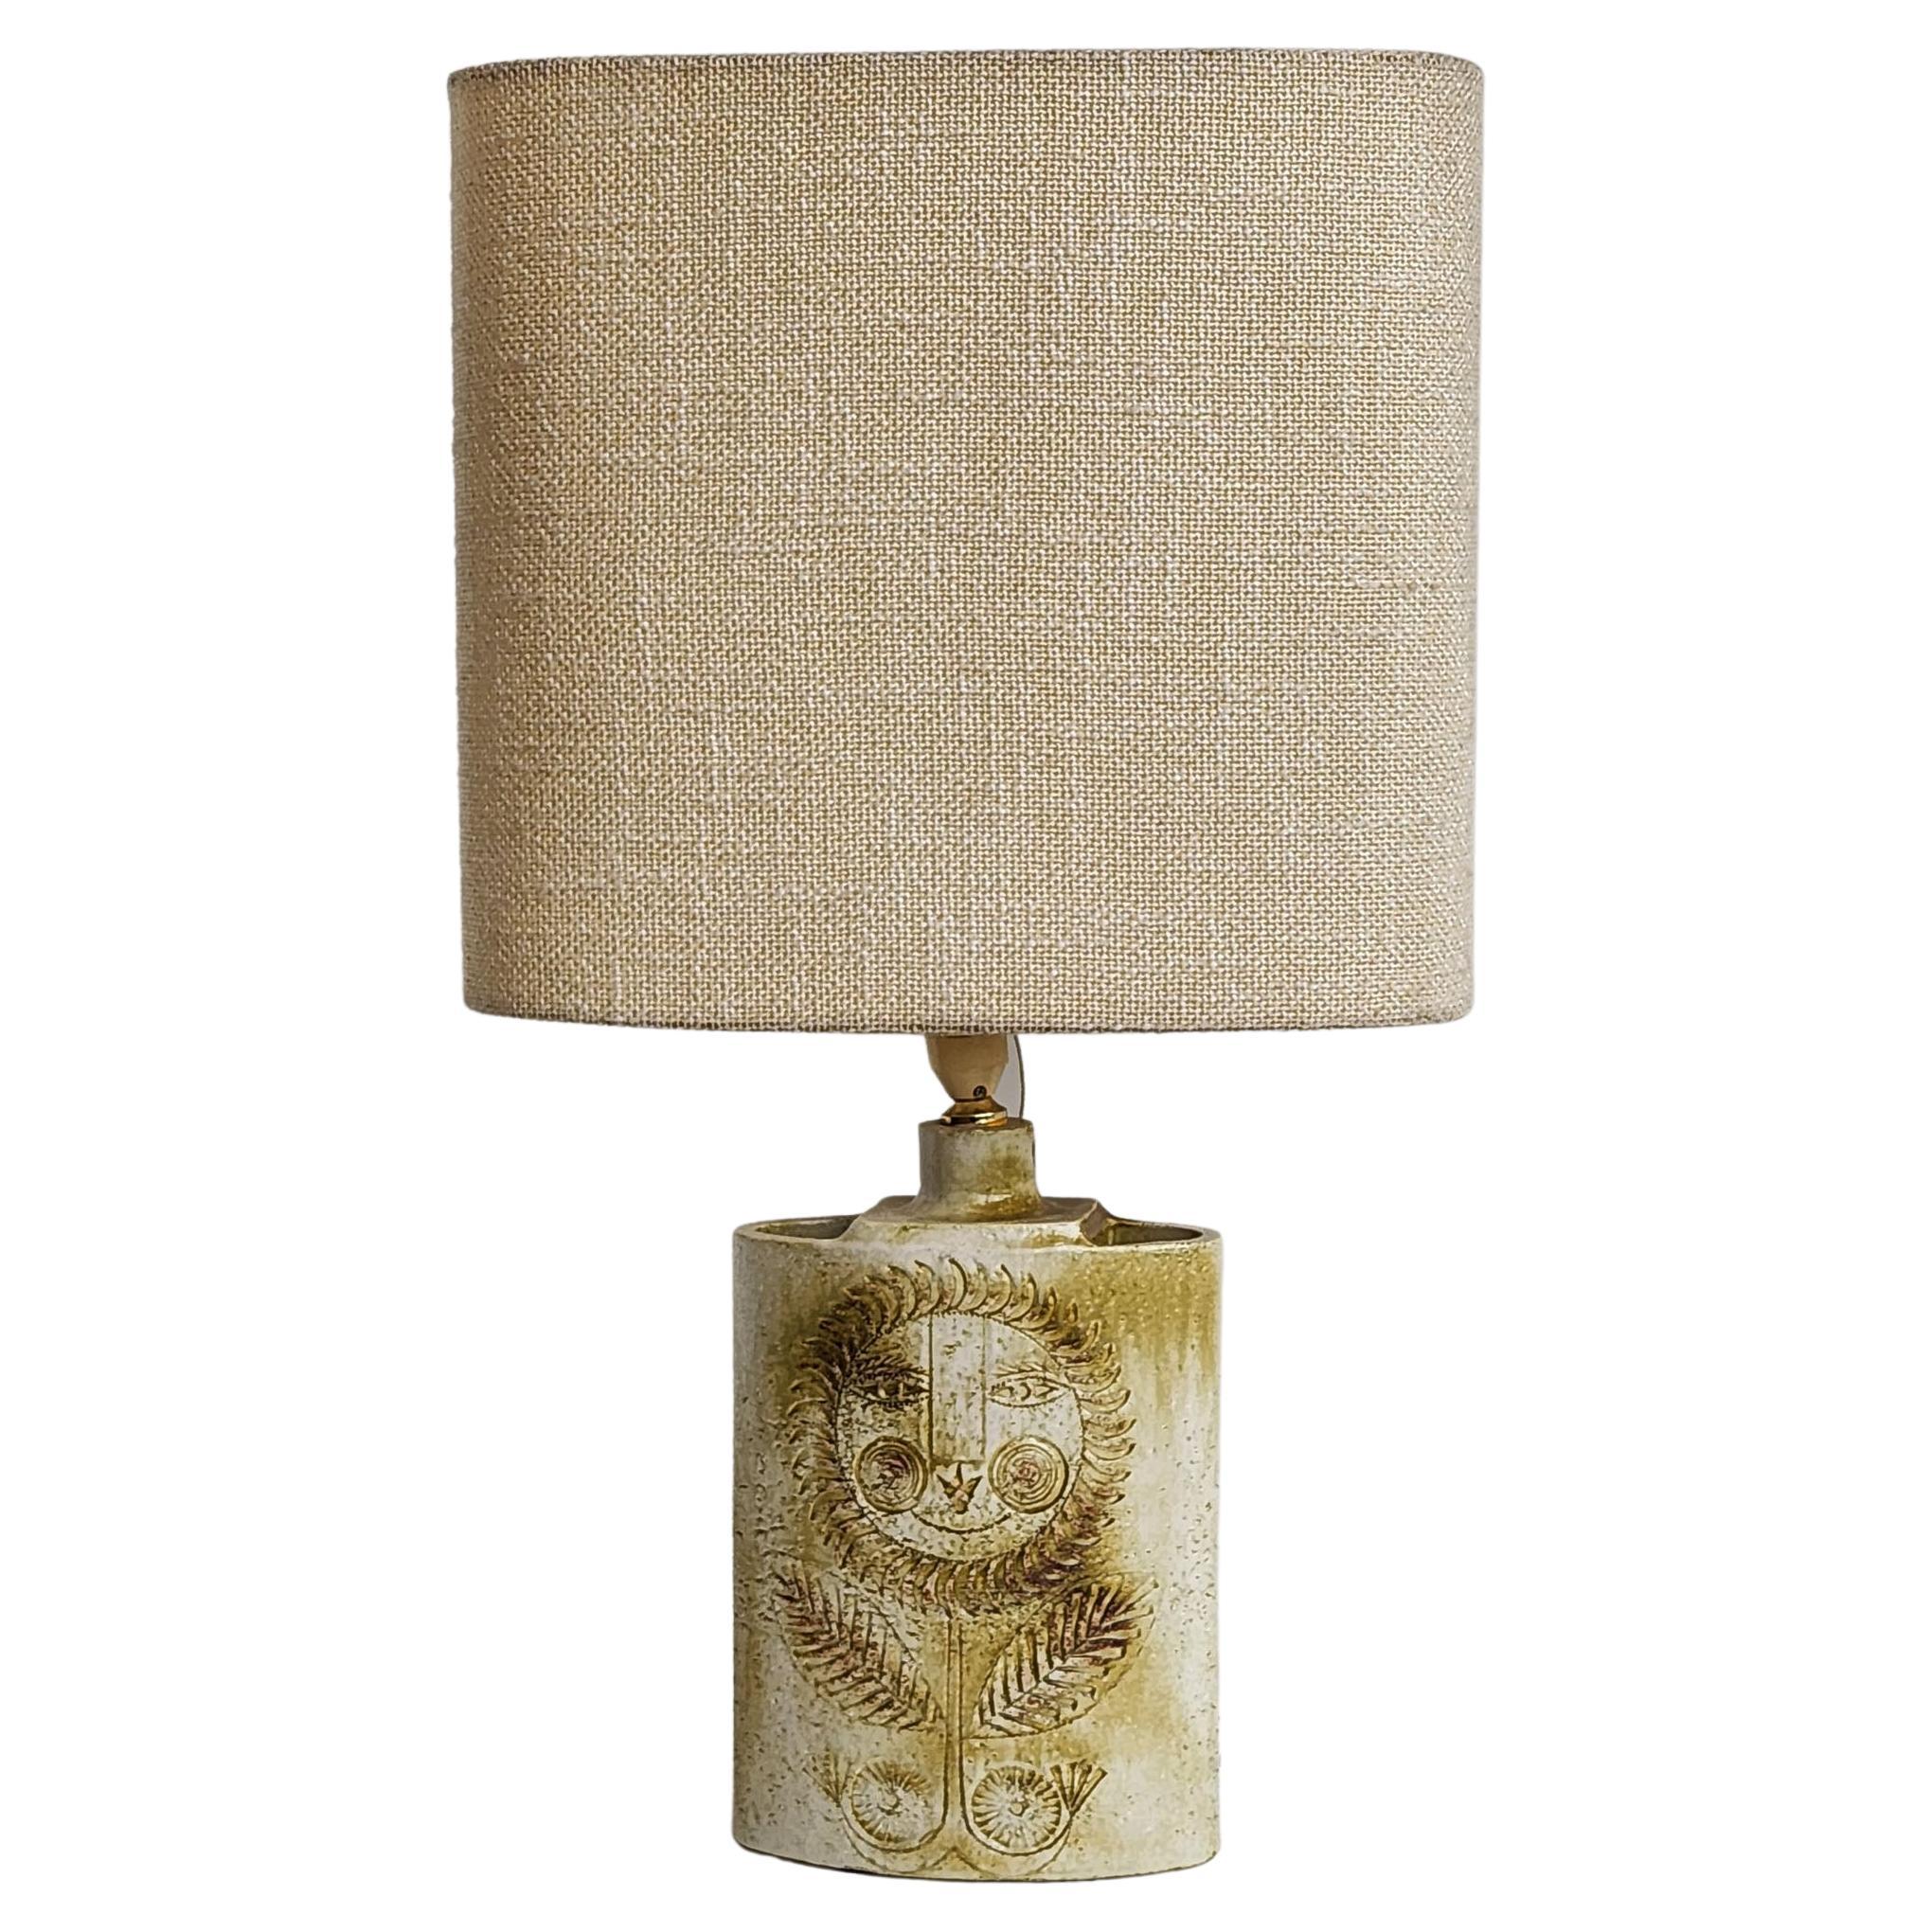 Roger Capron - Oval Cream Glazed Lamp For Sale